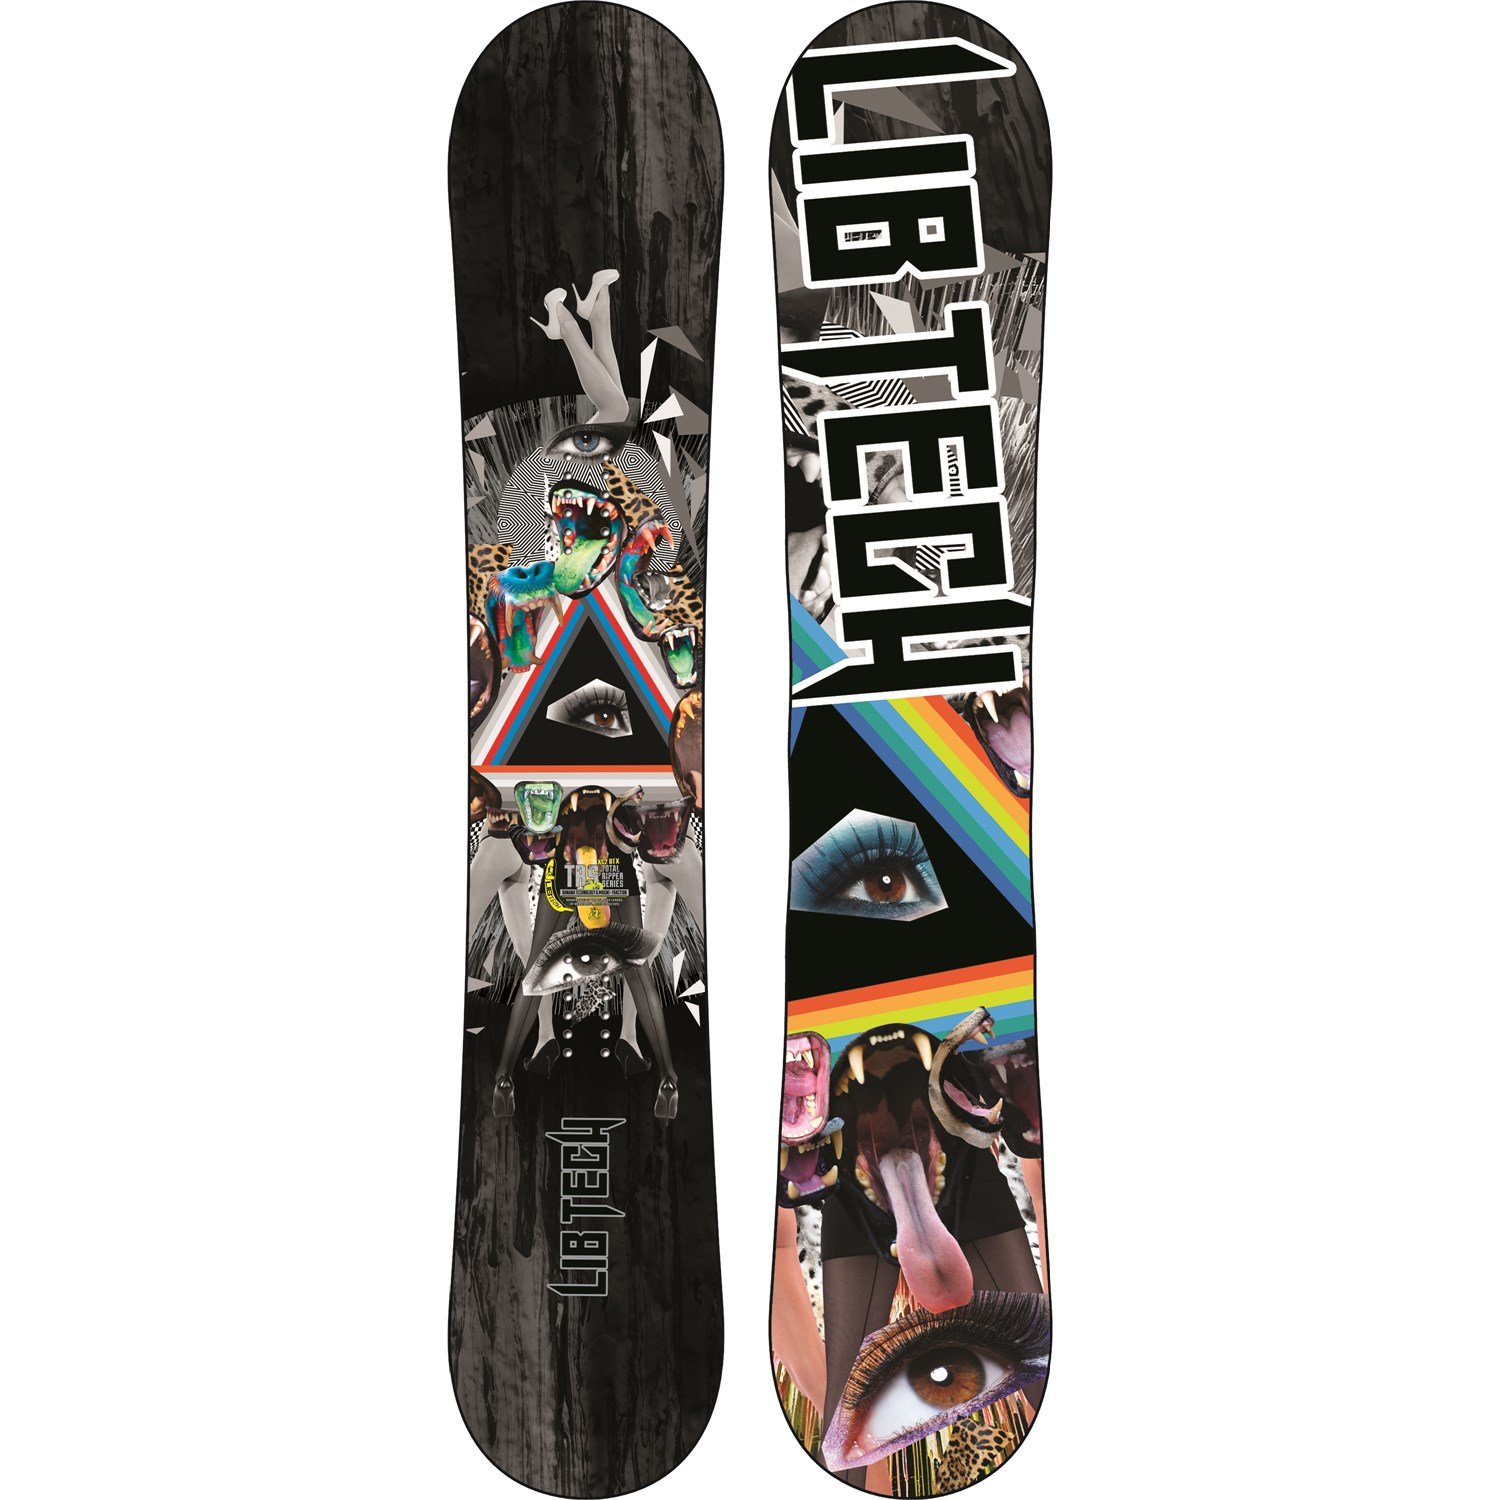 LIB TECH snowboard skateboard ski 2014 4 STICKER SET New Old Stock Flawless 